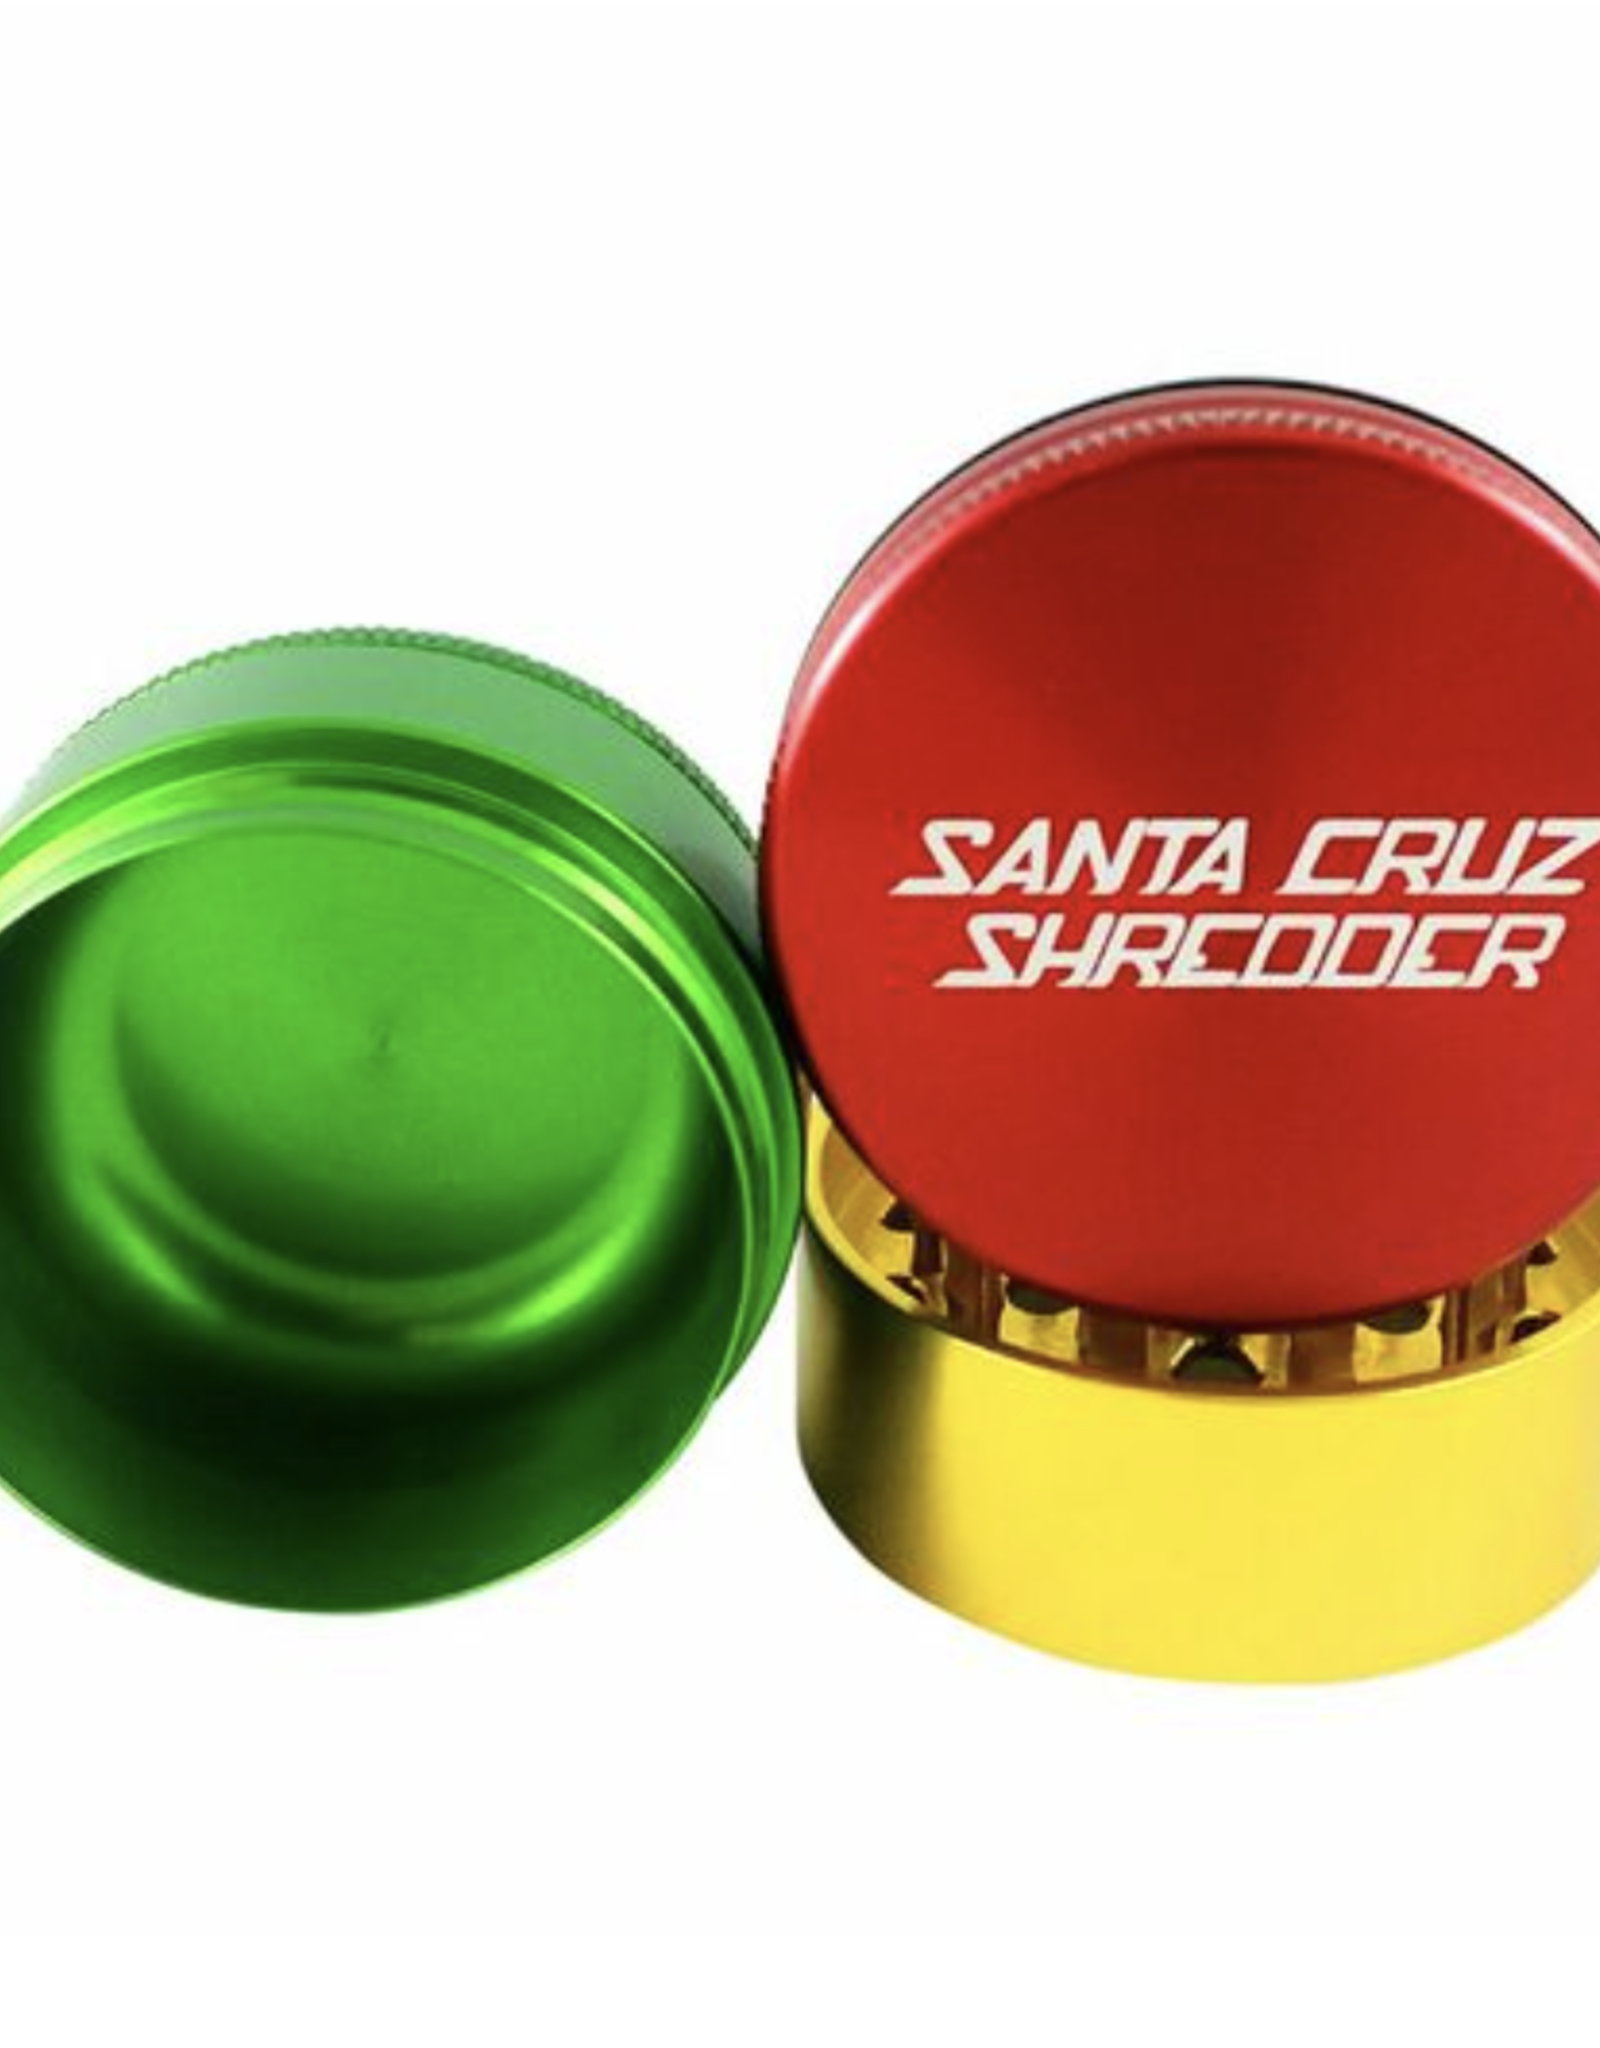 Santa Cruz Shredder Rasta 2.75" 3-piece Grinder